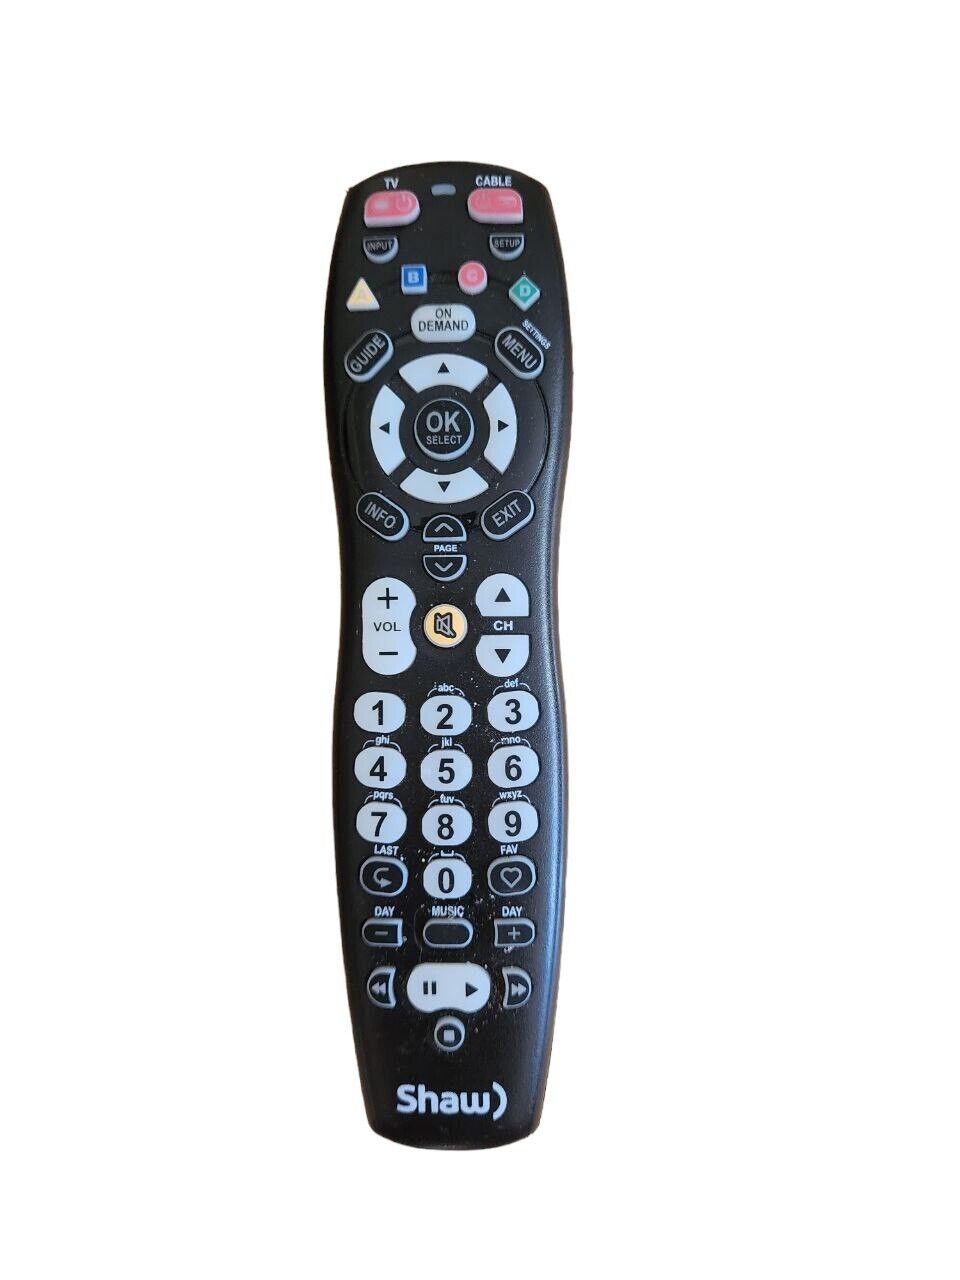 Shaw Remote Control Genuine Model 2020B0-B1 UEI URC Black On Demand Cable/TV